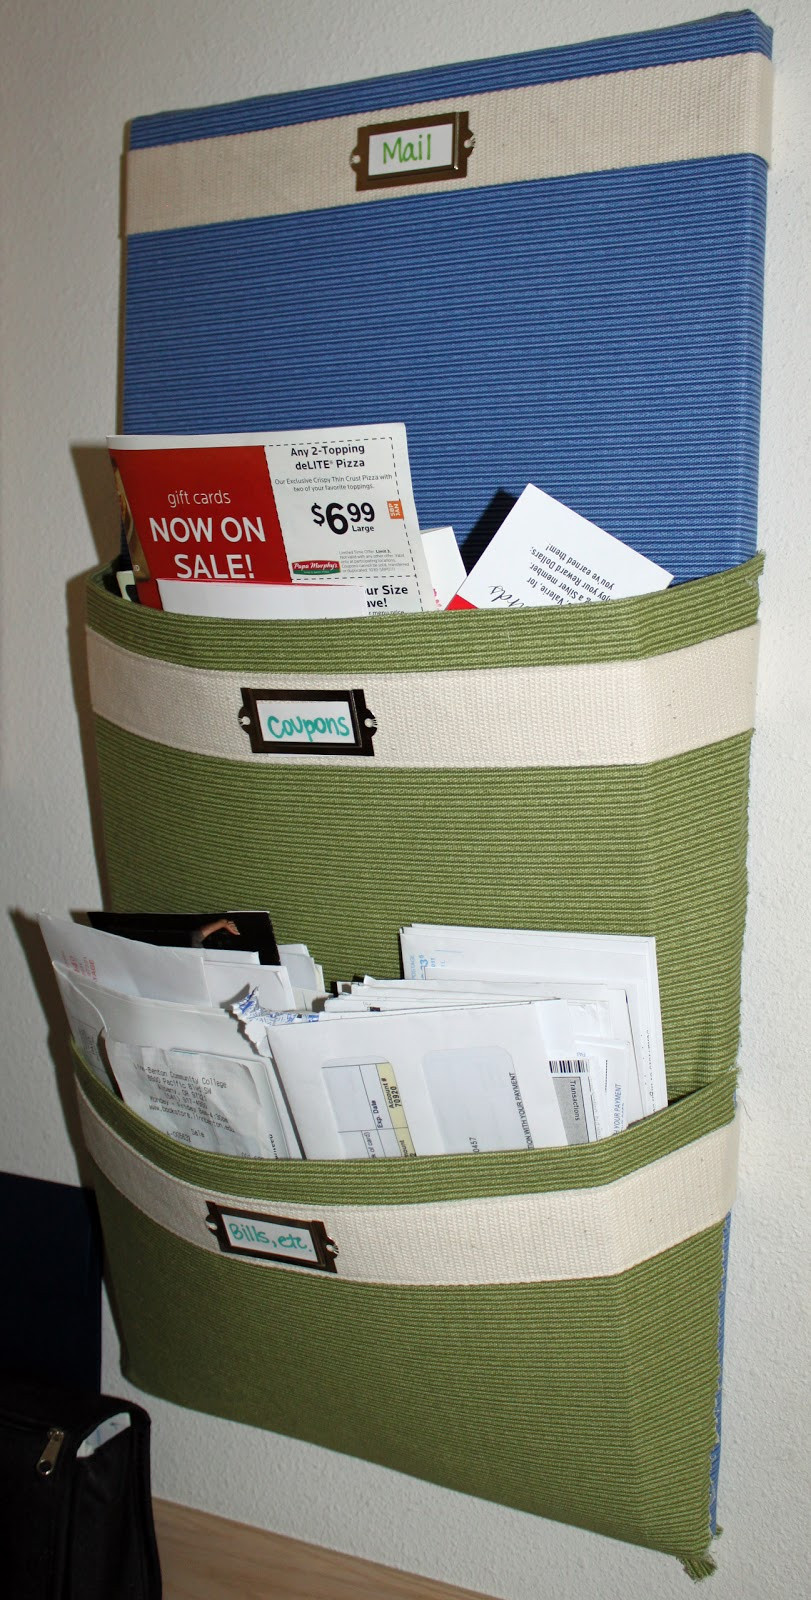 Best ideas about DIY Mail Organizer
. Save or Pin Purplest Pecalin Still Spring Cleaning DIY Mail Organizer Now.